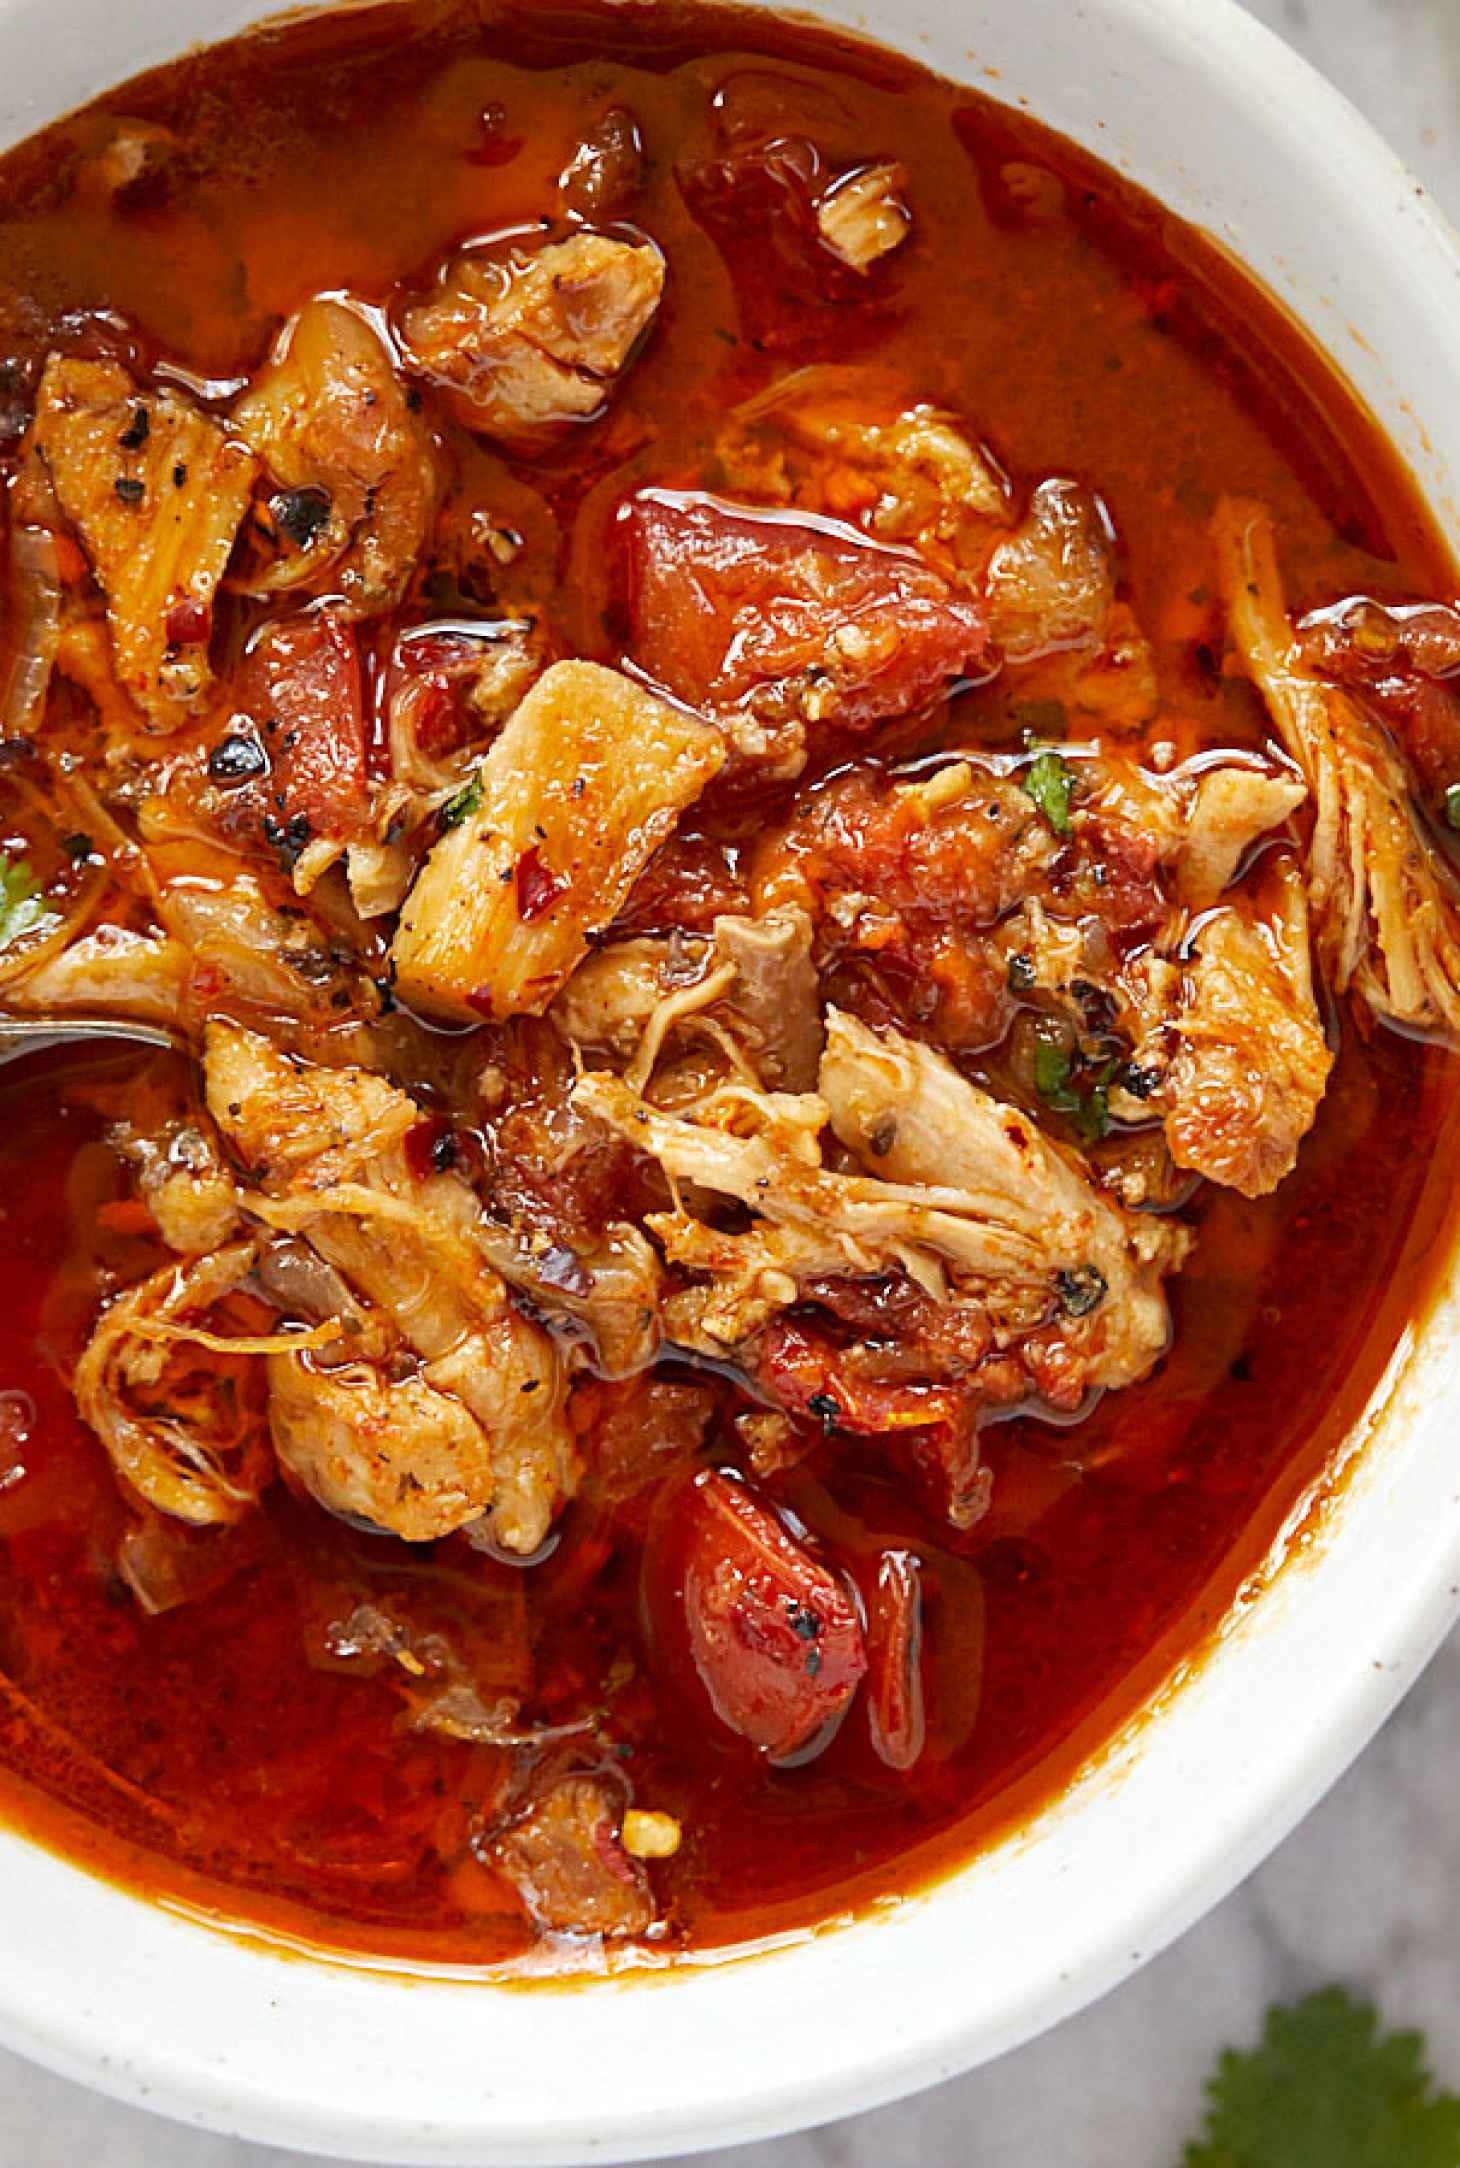 Instant Pot Chicken Tomato Soup - #recipe by #eatwell101 - https://www.eatwell101.com/instant-pot-chicken-tomato-soup-recipe